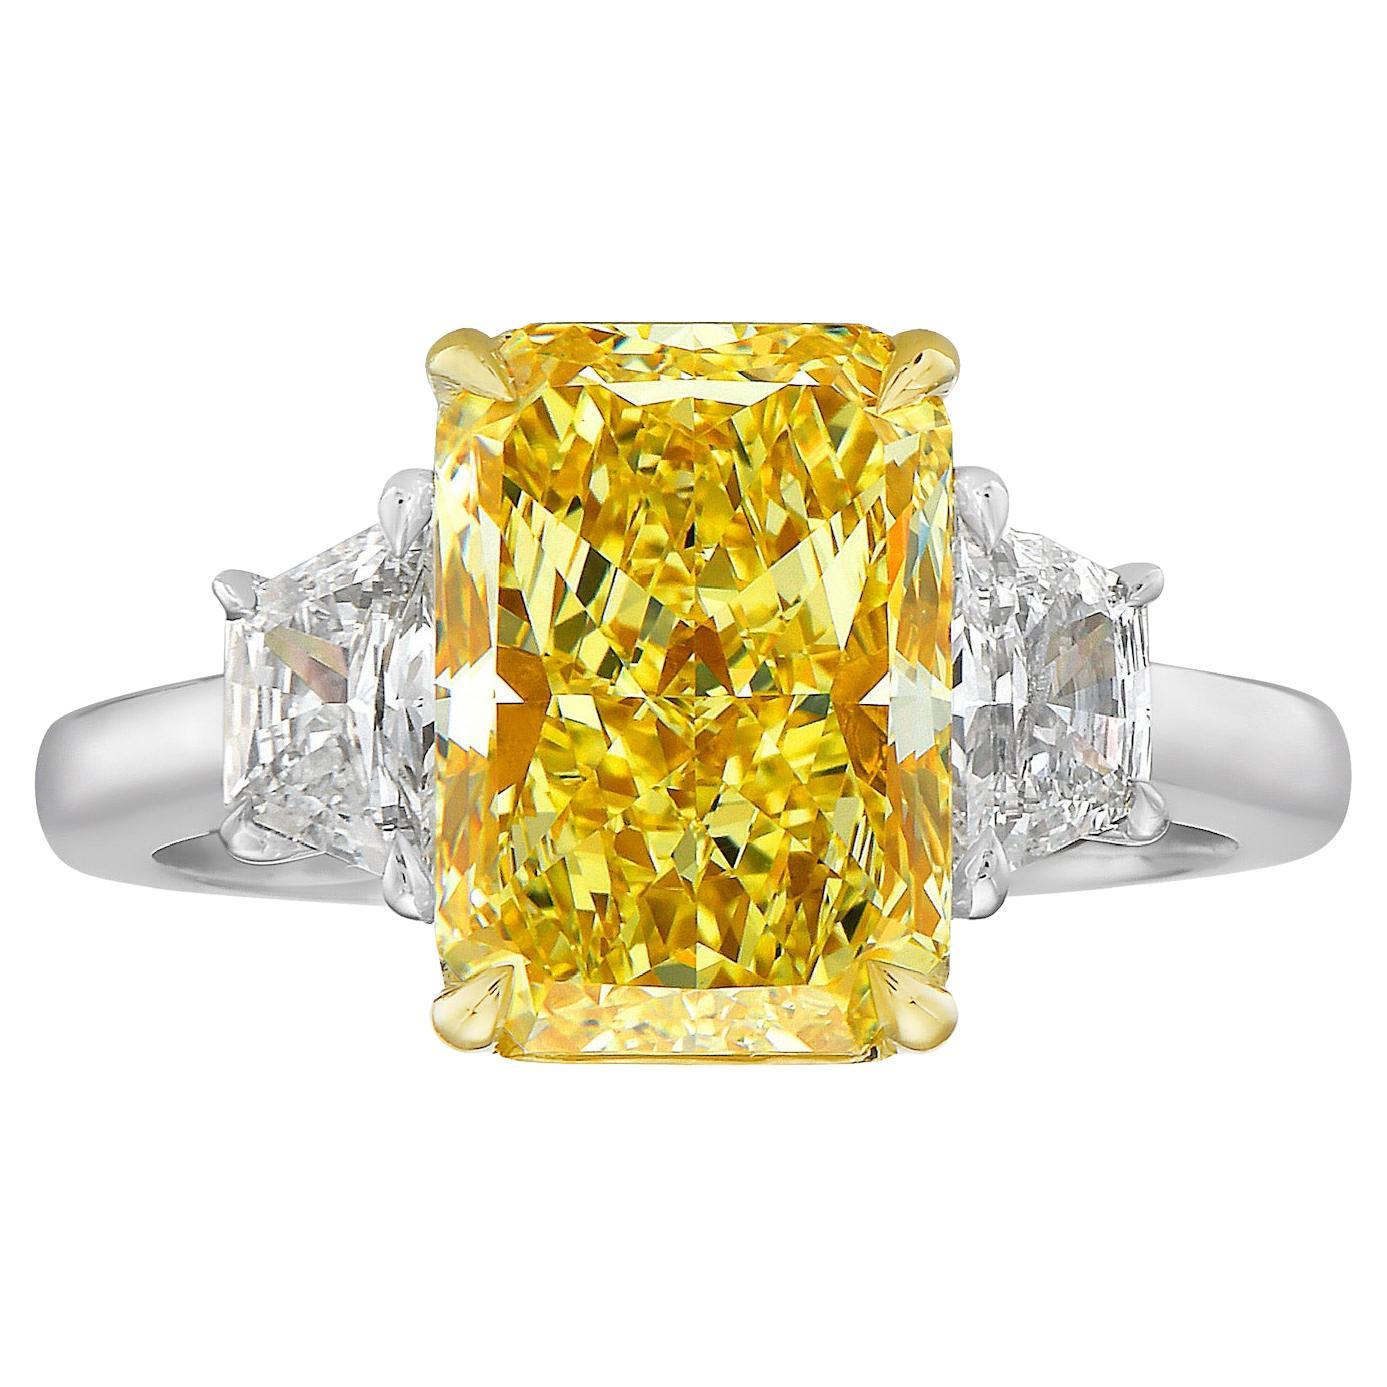 3 Carat GIA Flawless Fancy Light Yellow Elongated Radiant Diamond Ring